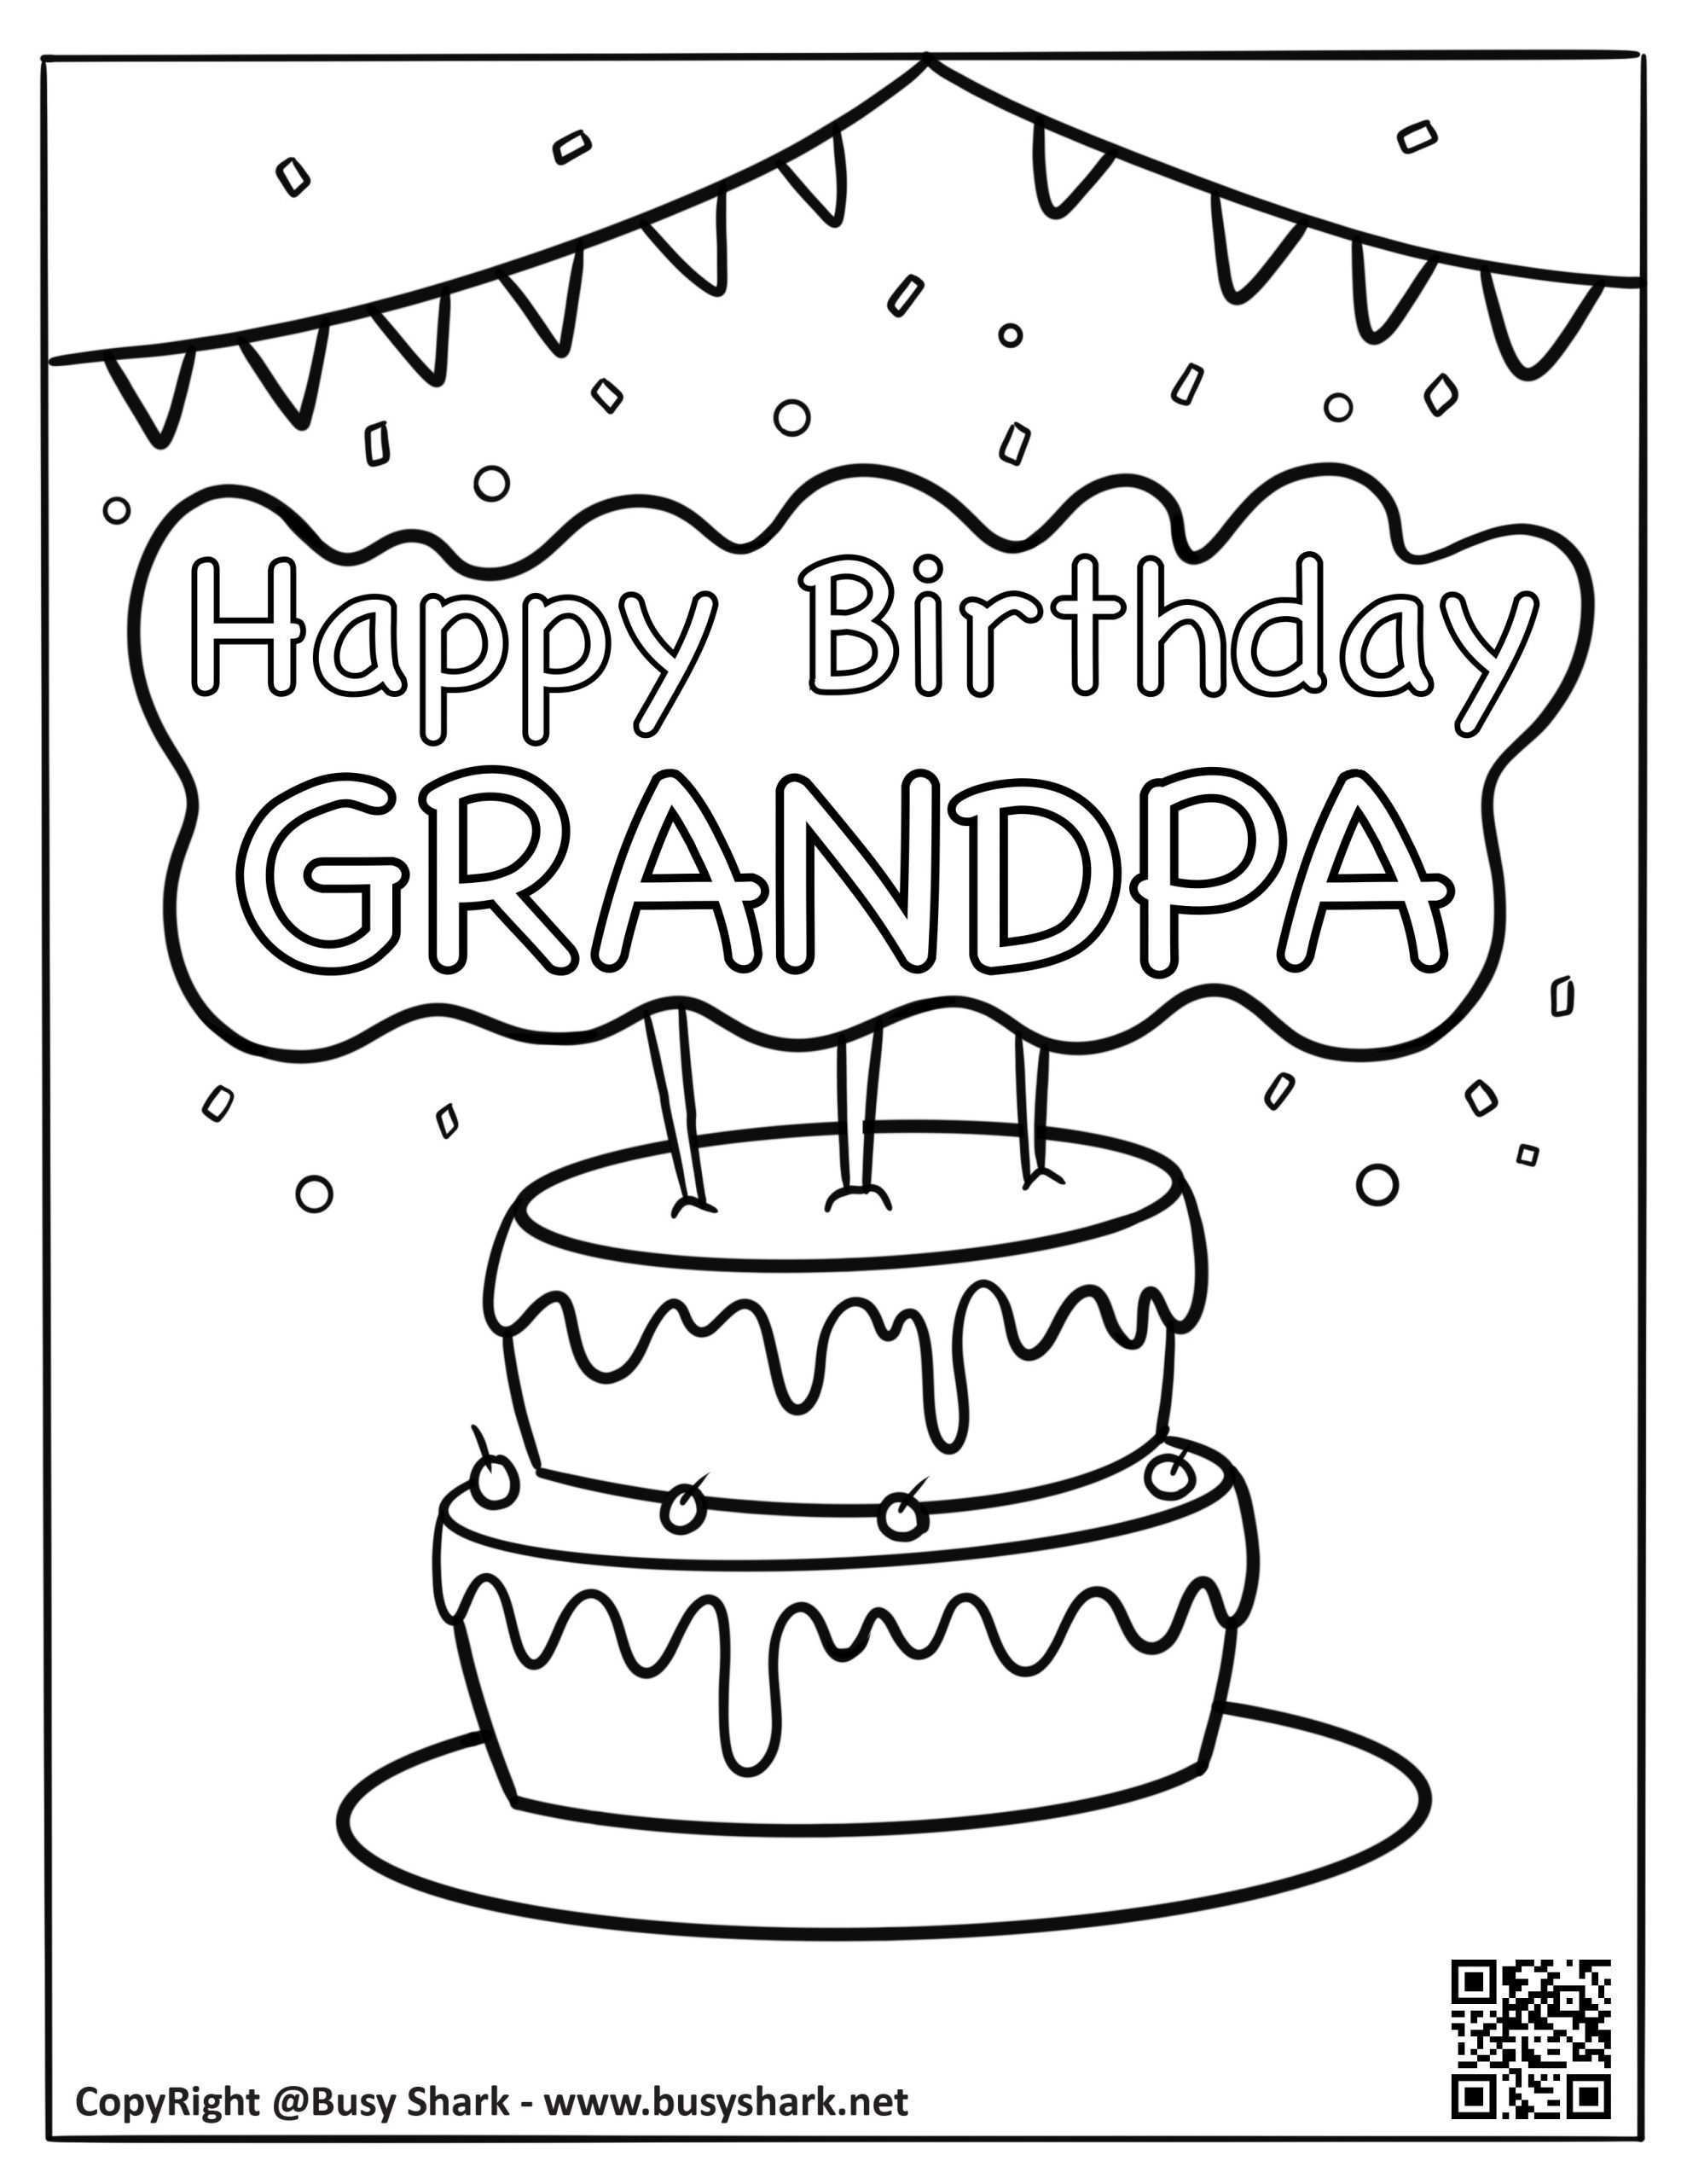 Happy birthday grandpa coloring page free printable